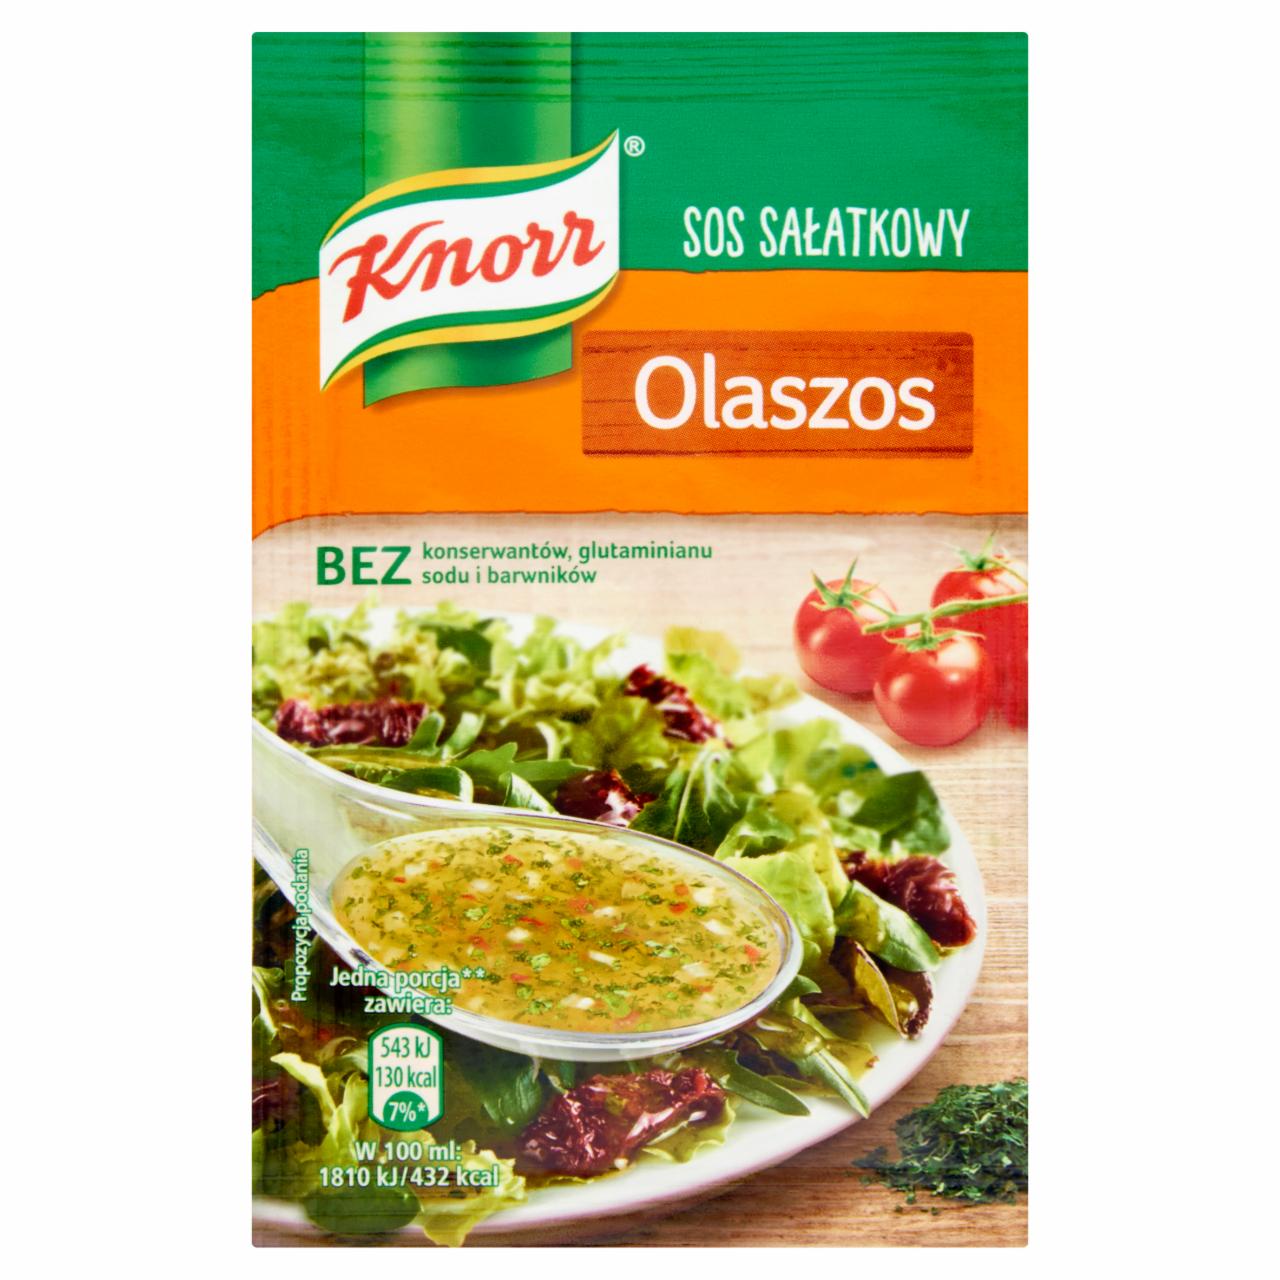 Képek - Knorr olaszos salátaöntet por 8 g